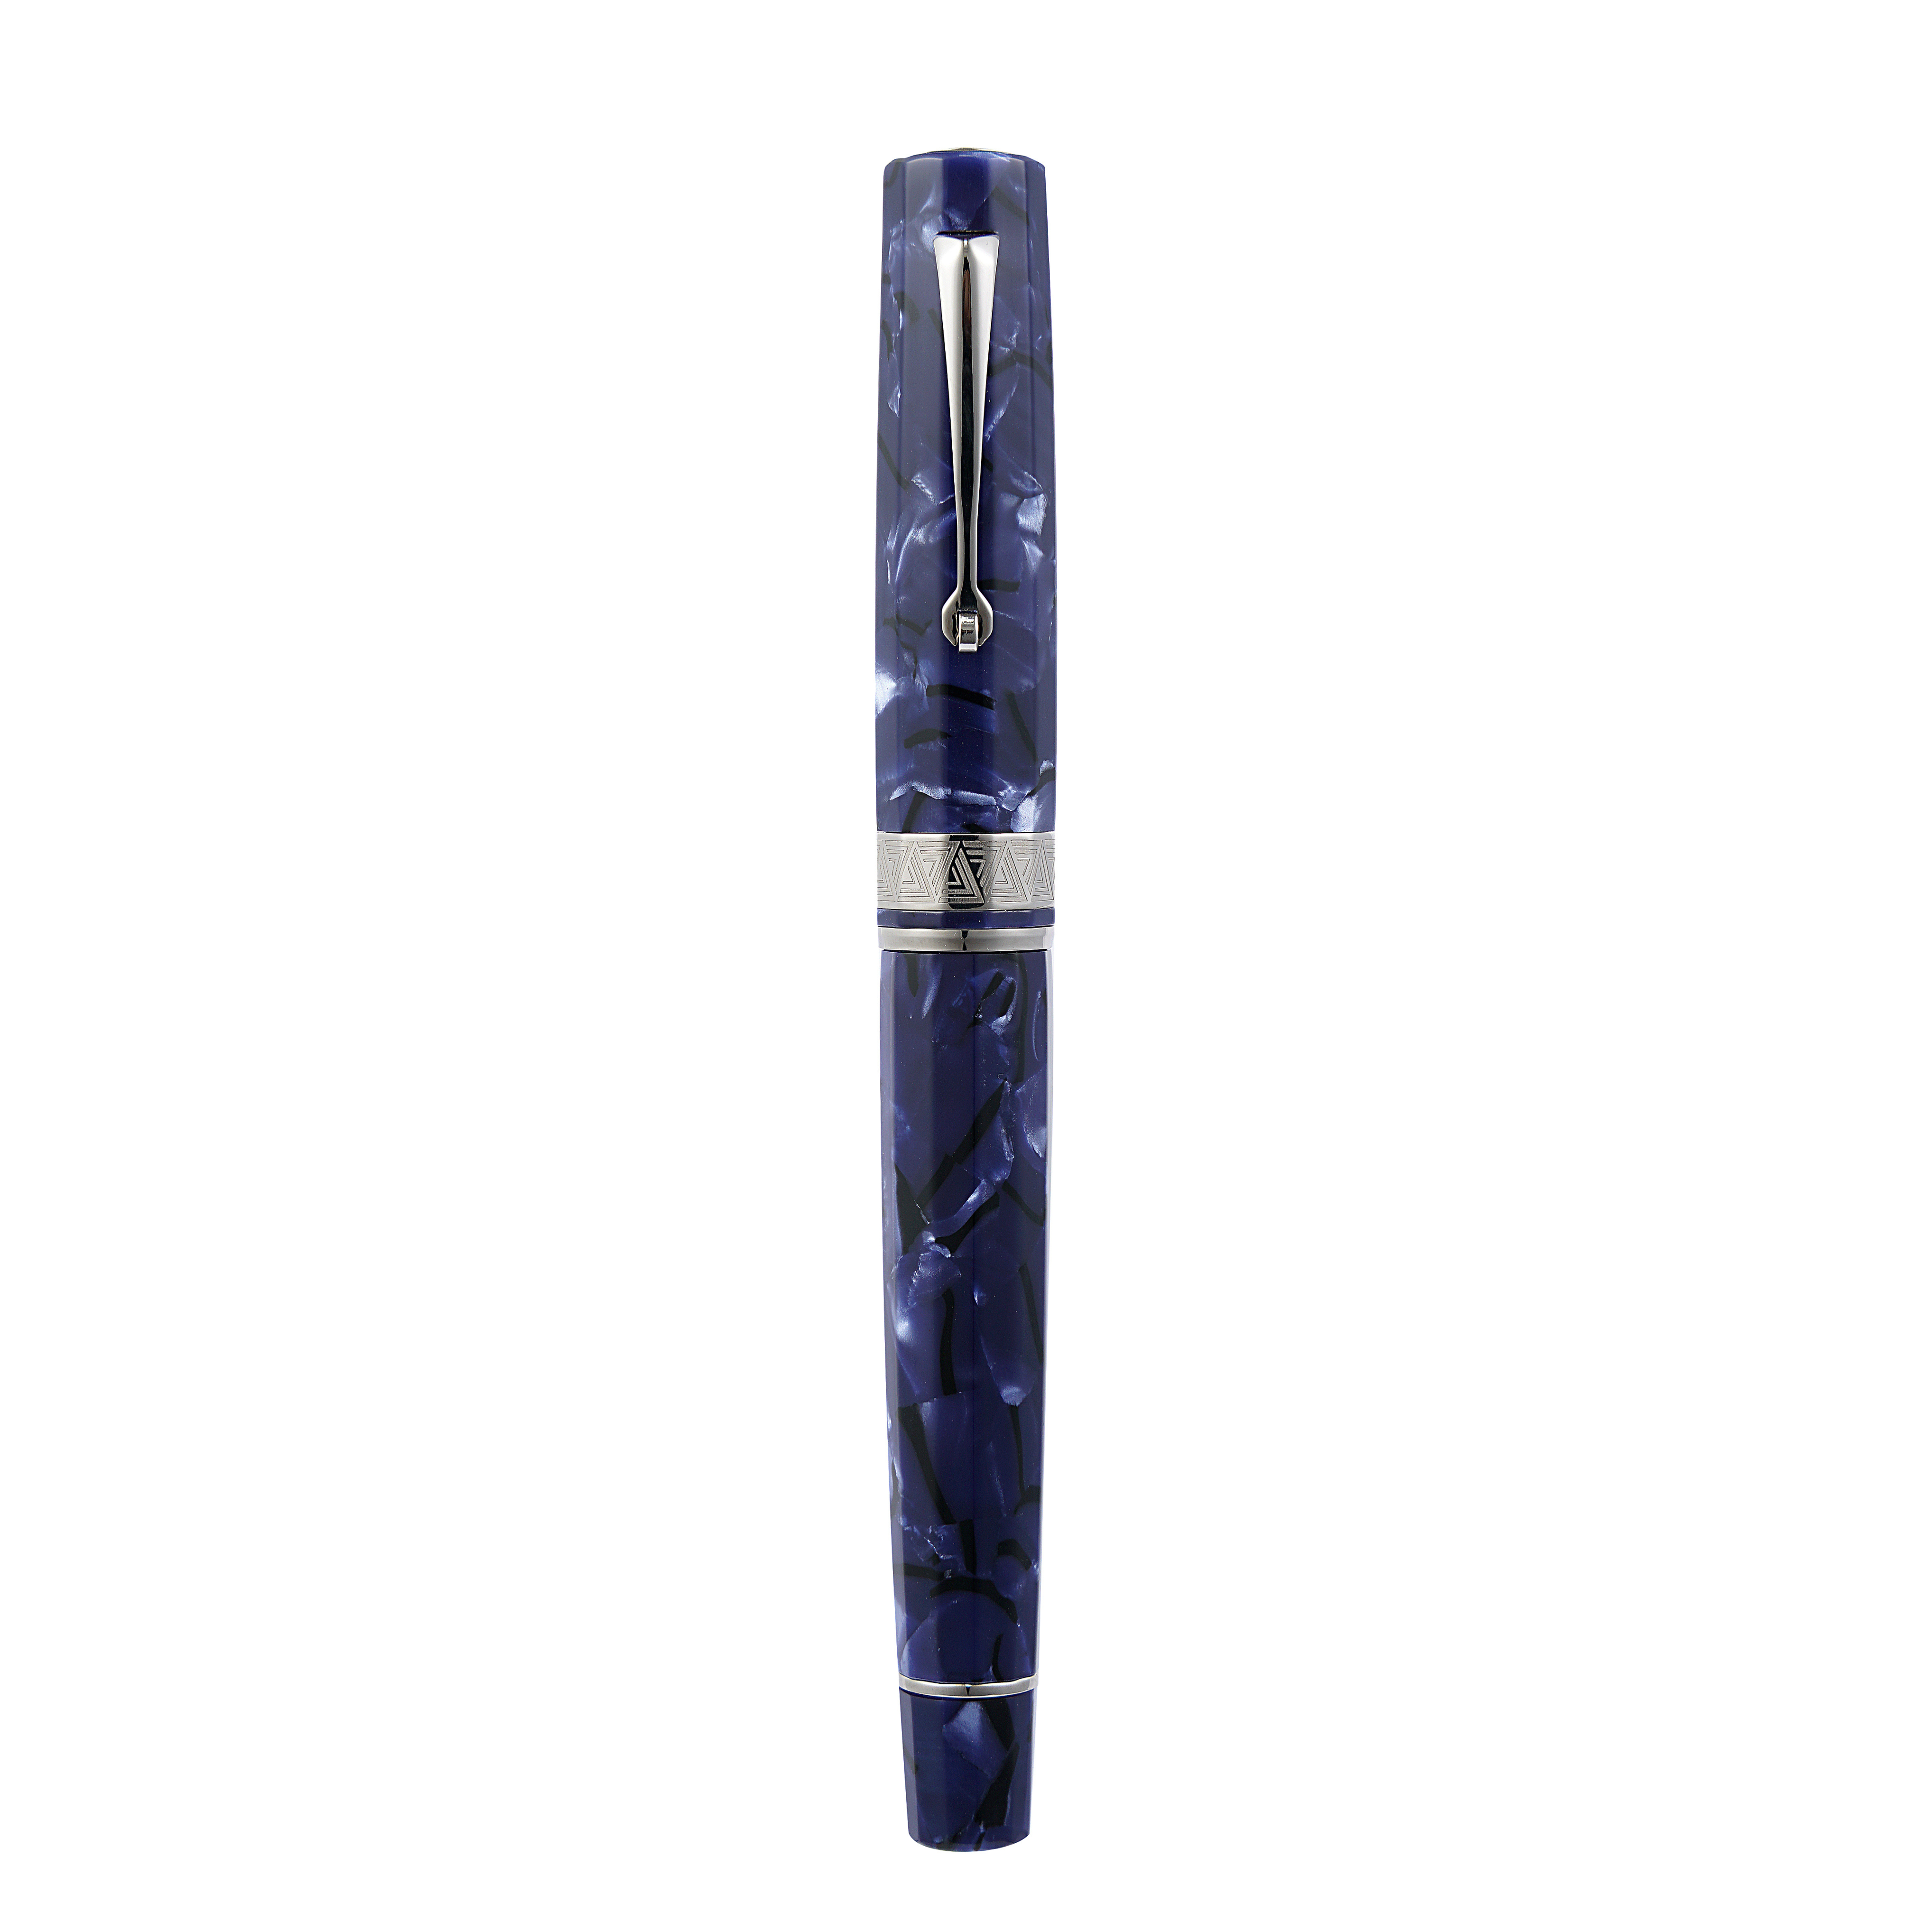 Penna stilografica OMAS Paragon in blu royale con finiture argento